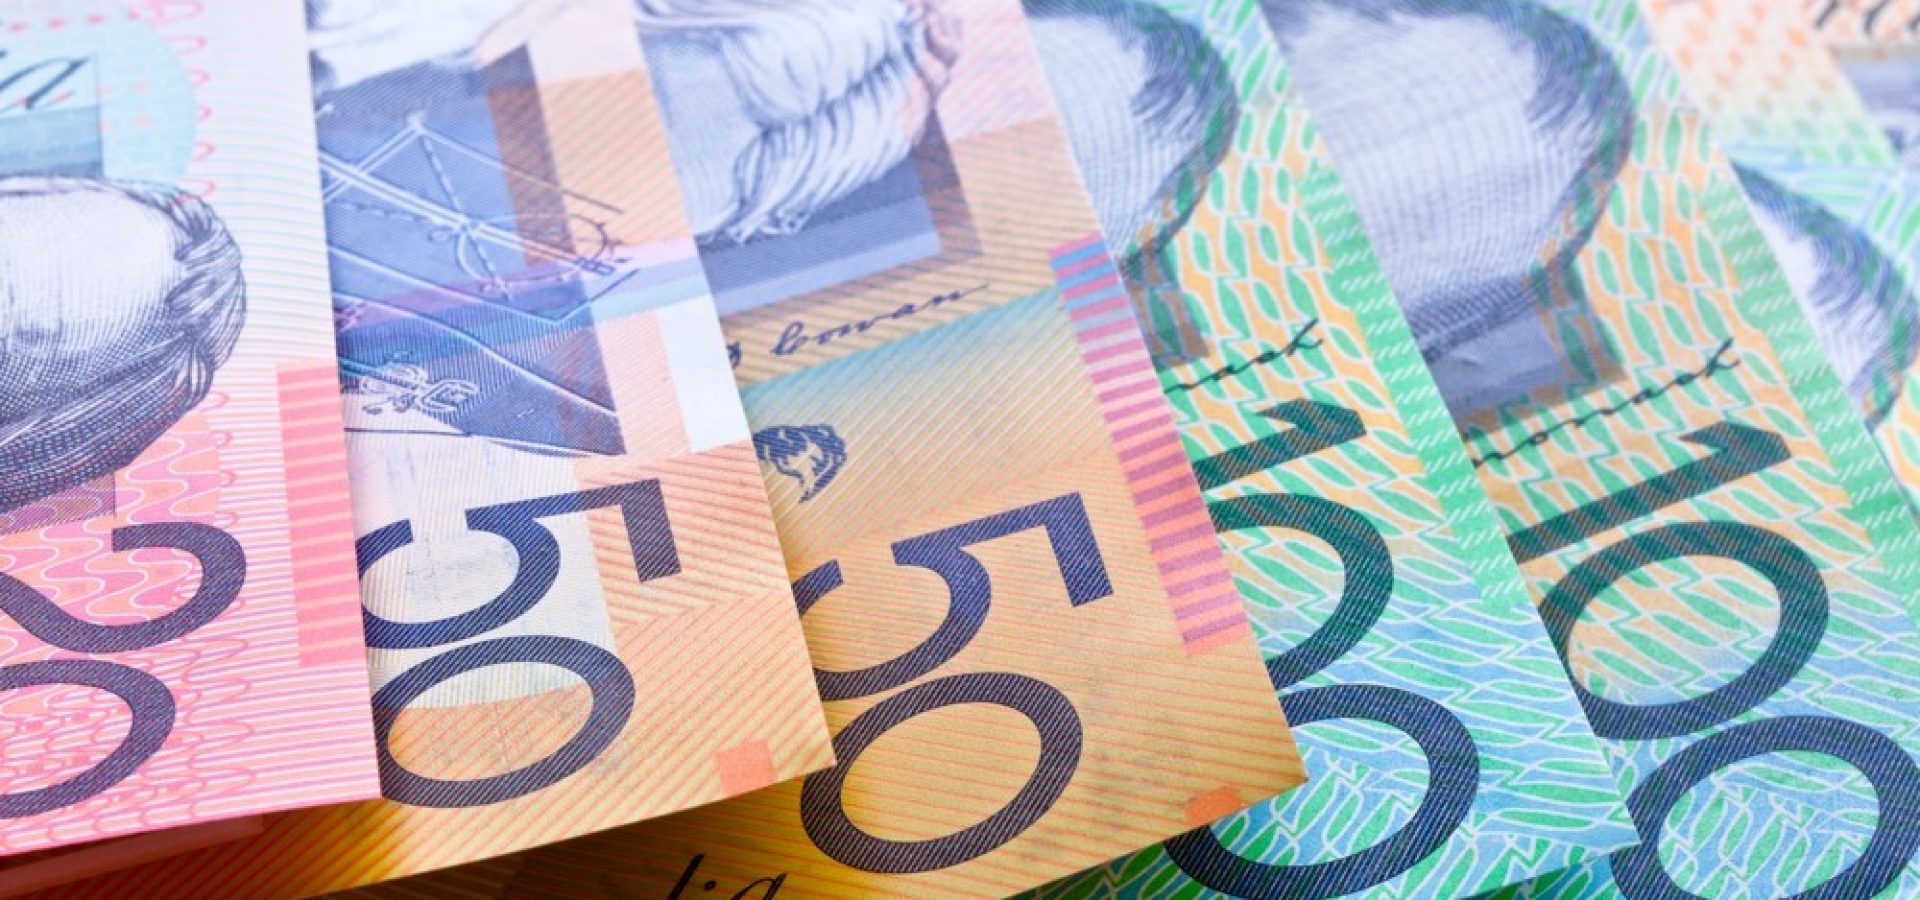 Wibest – Australian Money: Australian dollar bills.